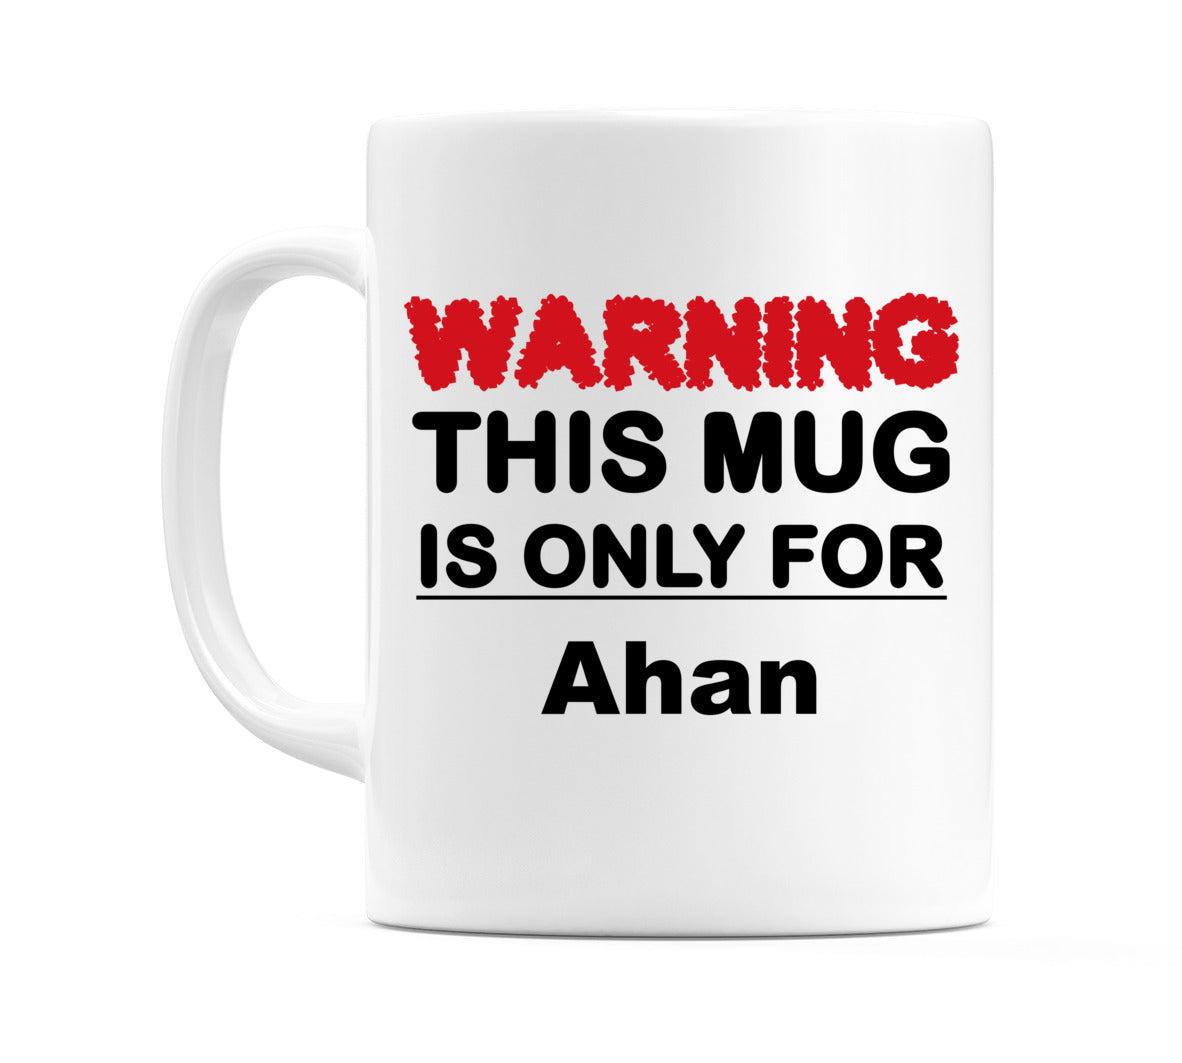 Warning This Mug is ONLY for Ahan Mug